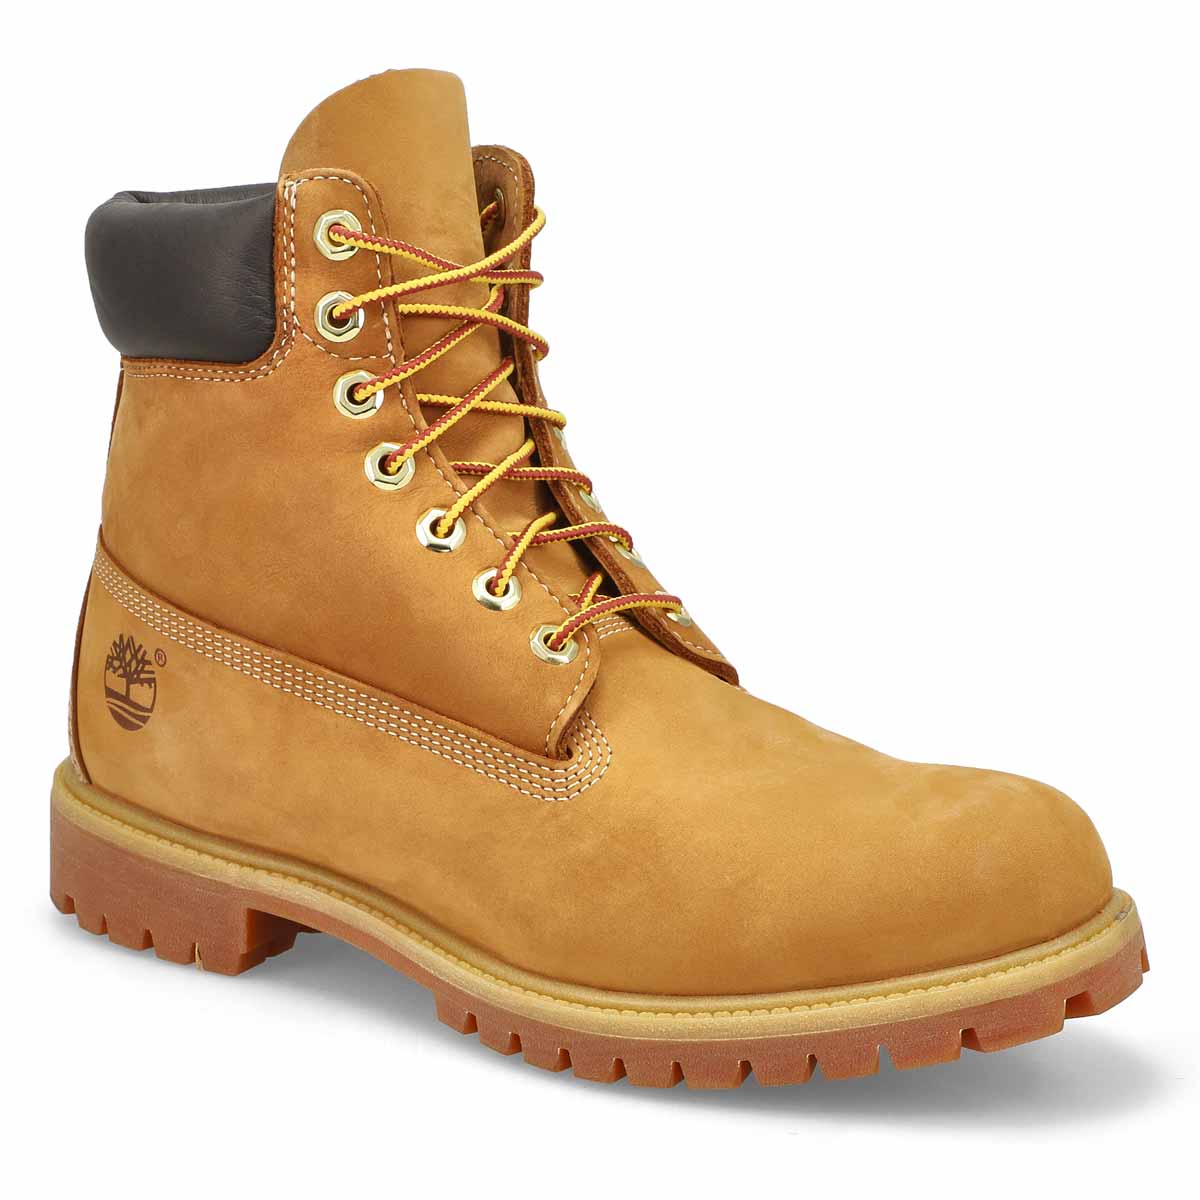 softmoc men's boots